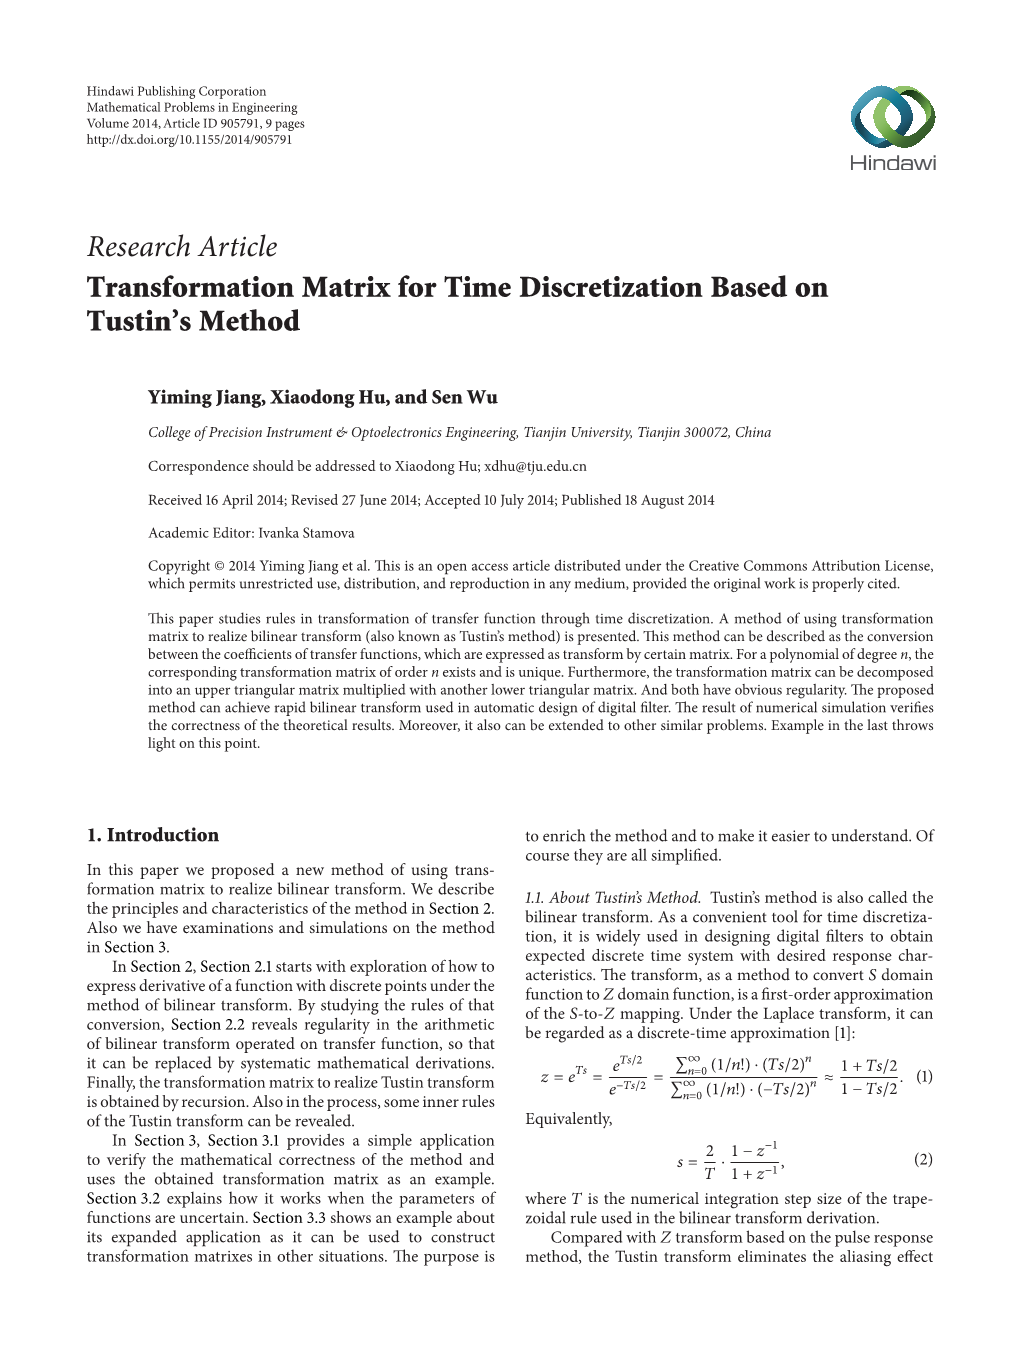 Transformation Matrix for Time Discretization Based on Tustin's